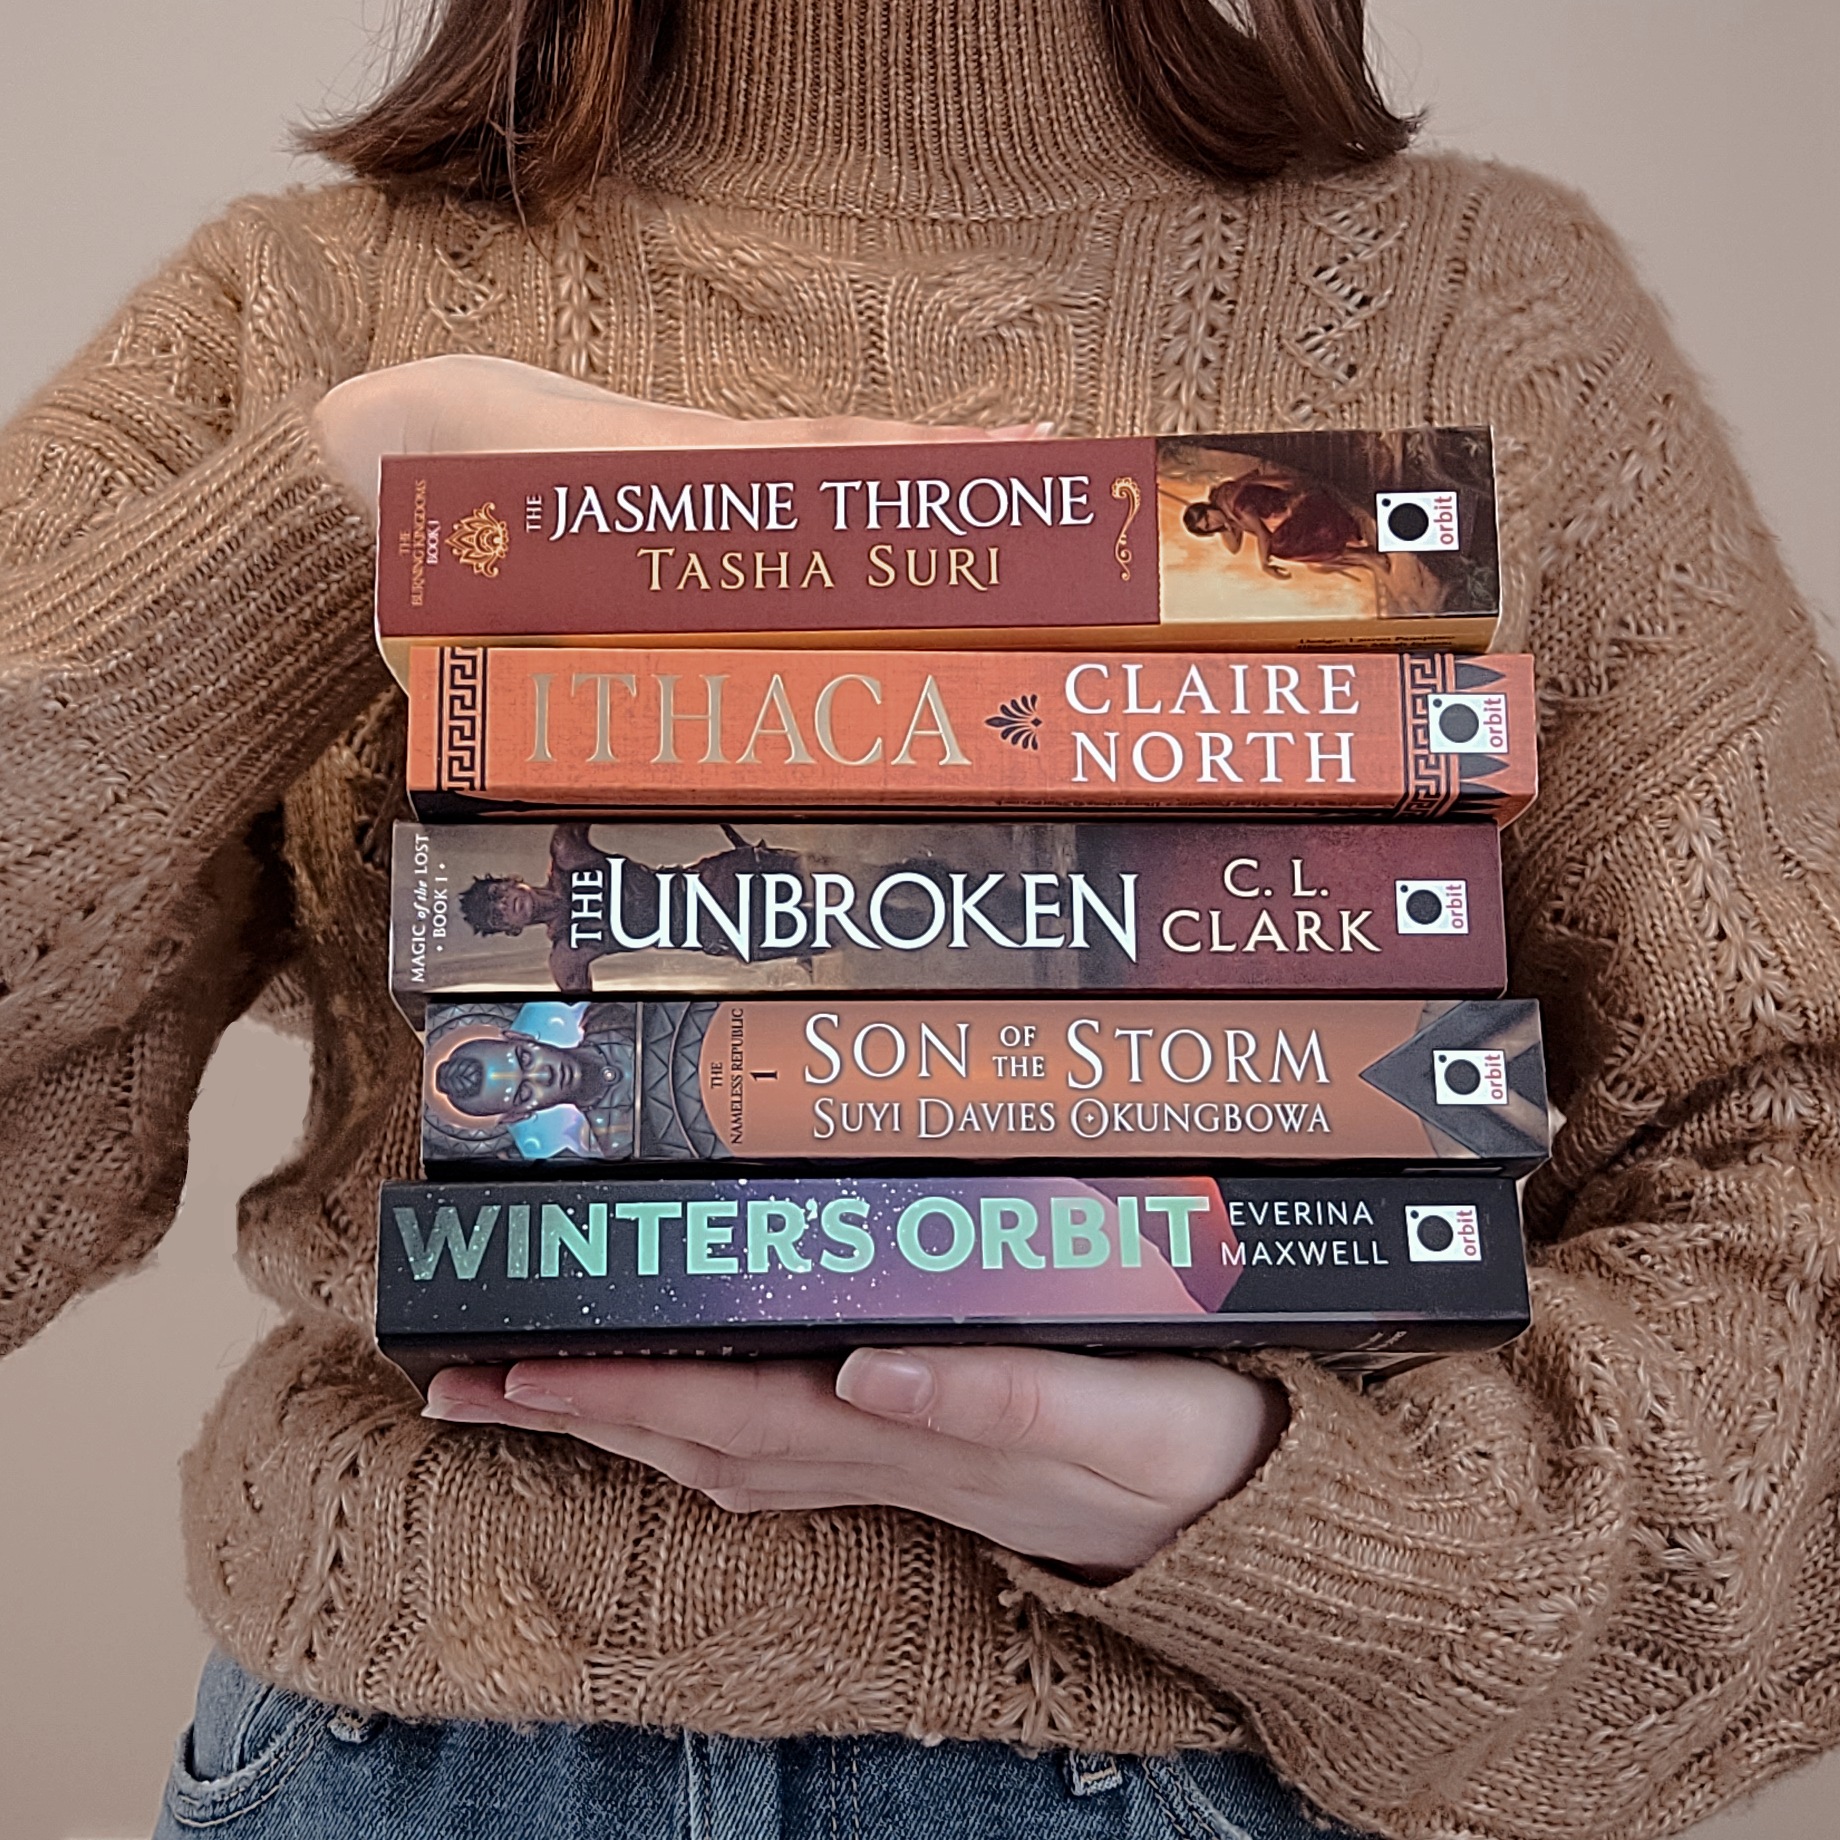 Anya's five favourite orbit books